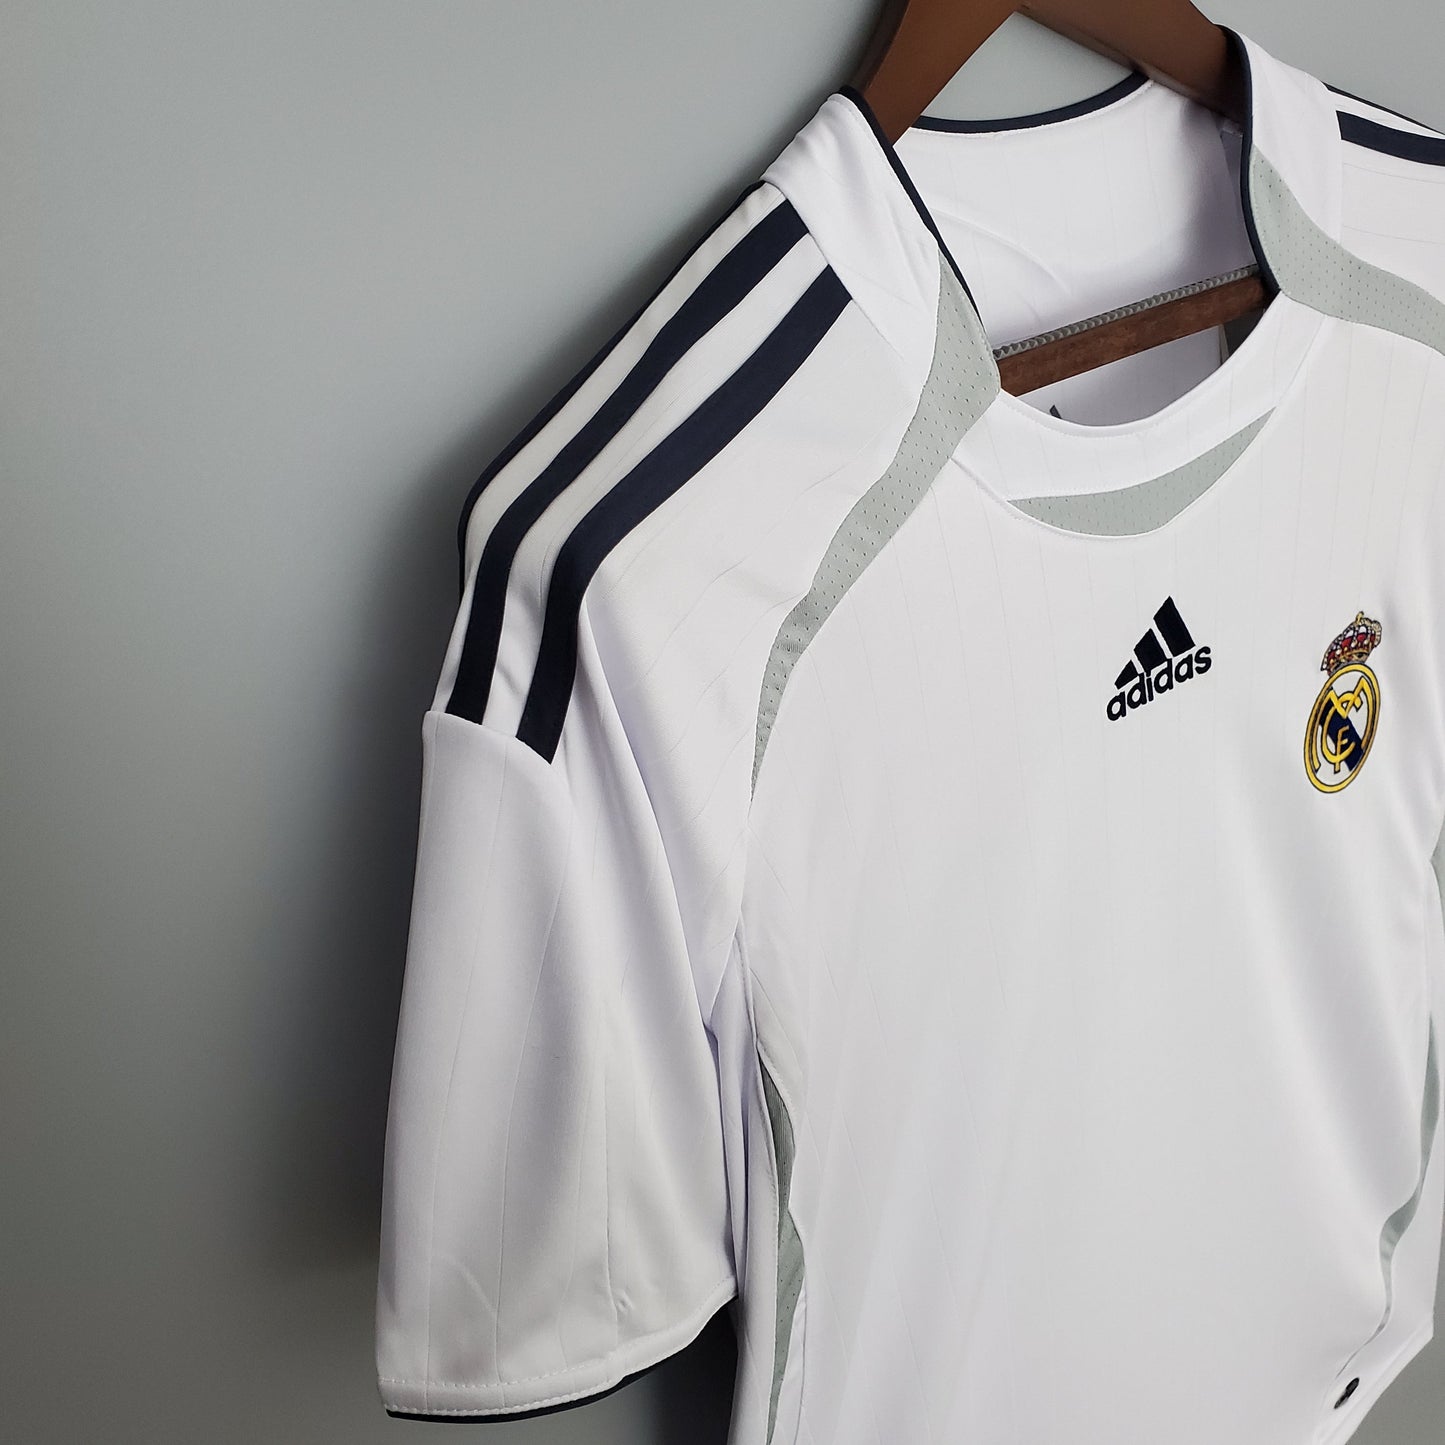 Real Madrid "Teamgeist" series white | Retro